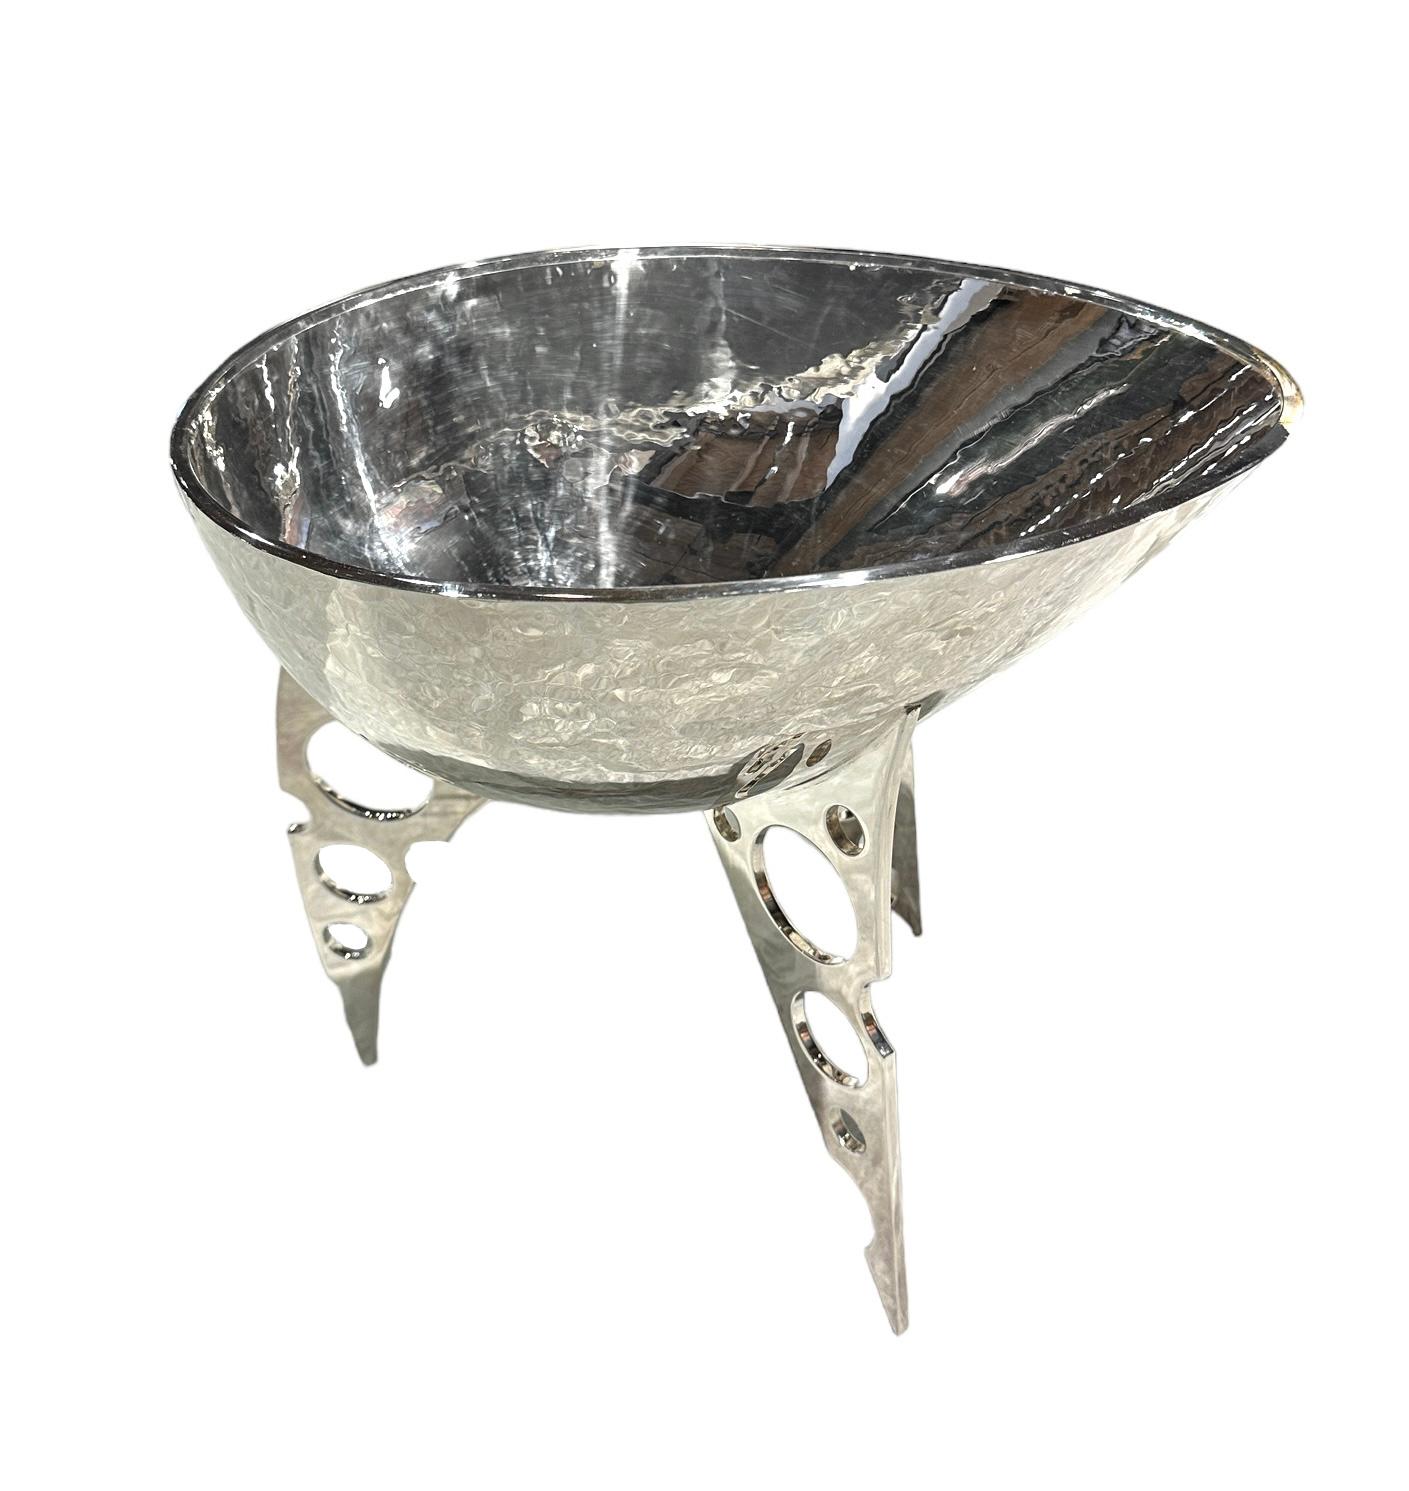 Italian Silver Vessel, Fruit Bowl Sculptural Object by Raju Peddada - 